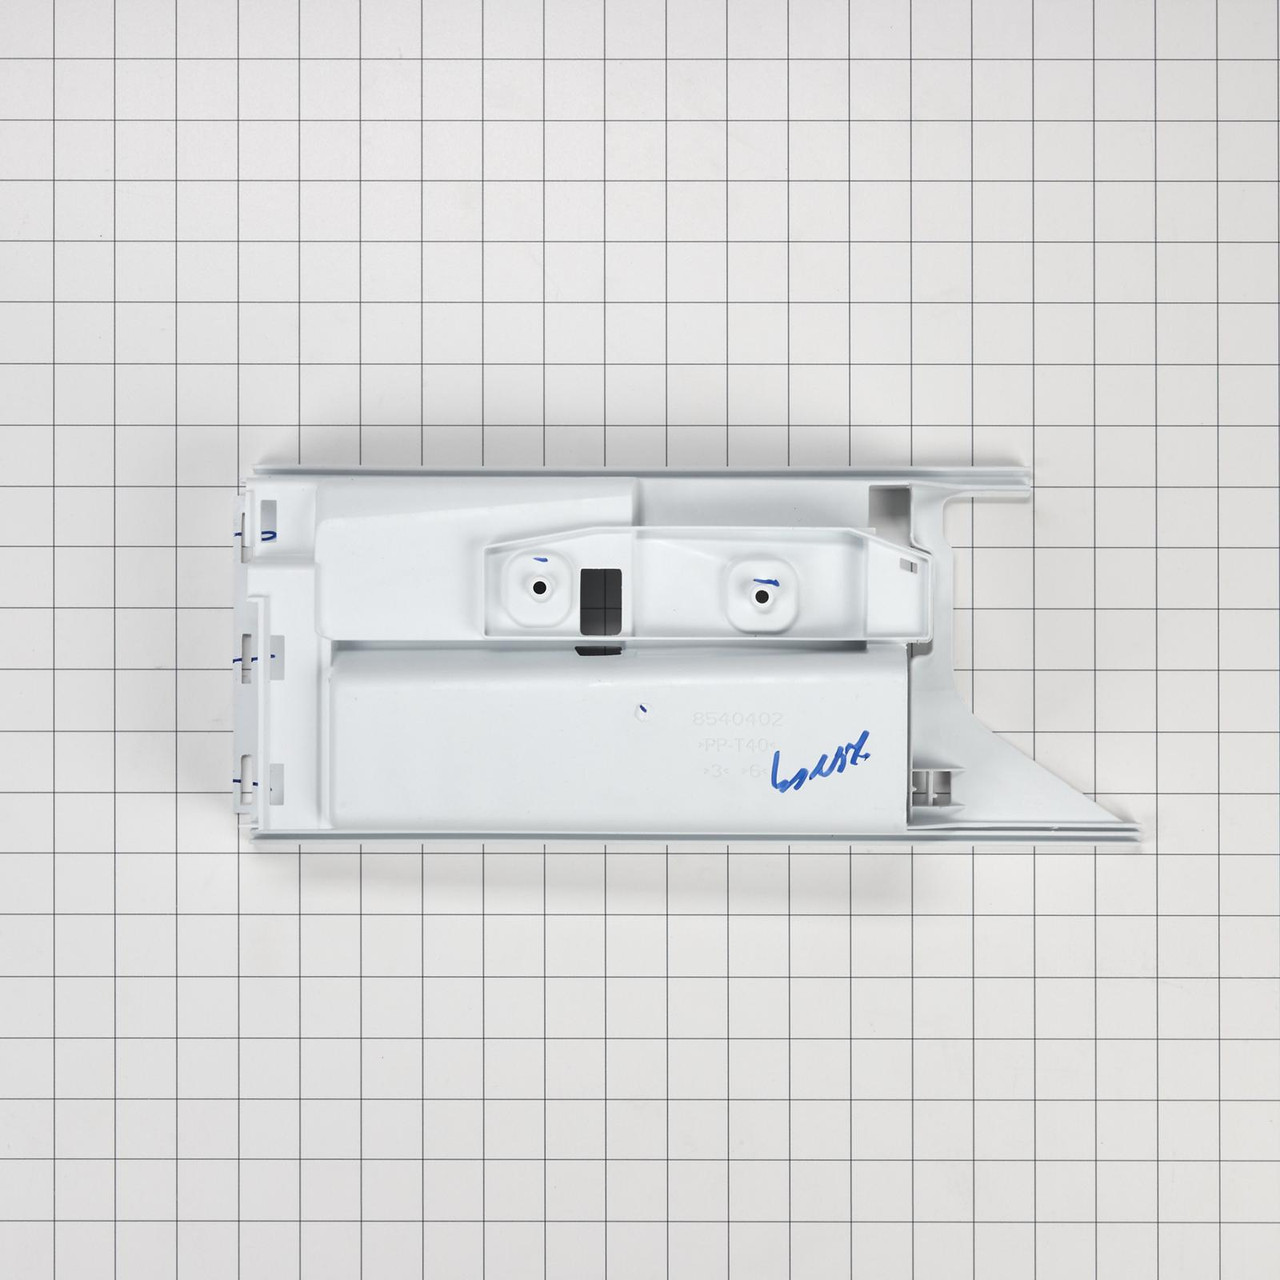 Whirlpool WP8540402 - Front Load Washer Detergent Dispenser Drawer - Image # 2